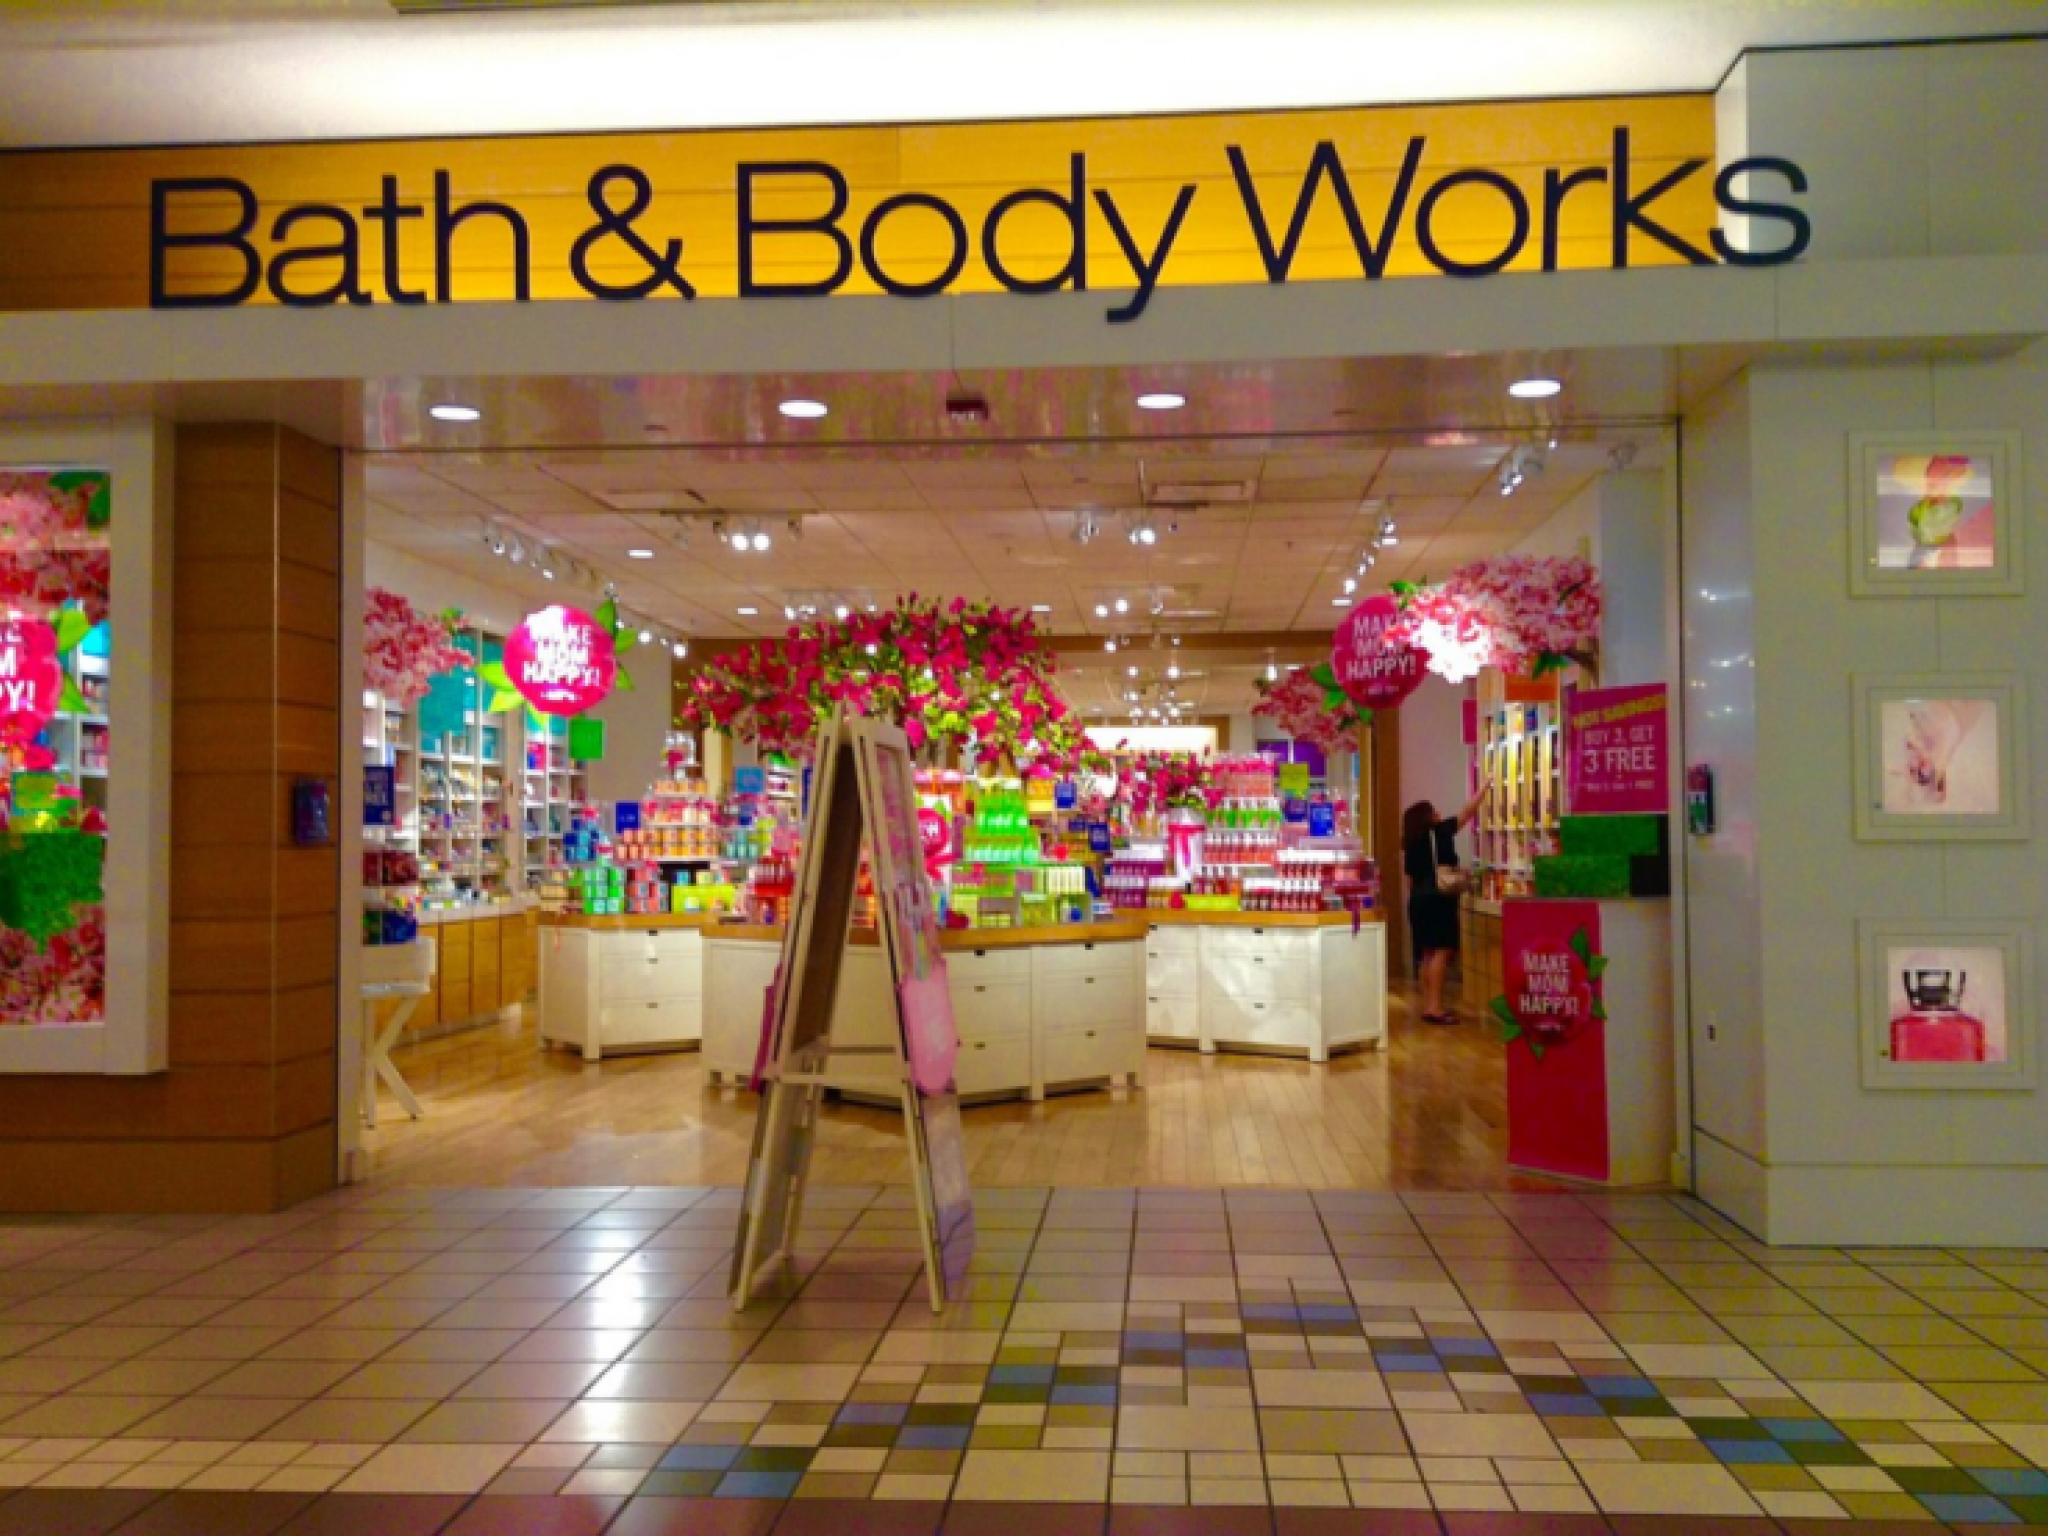  bath--body-works-clings-to-q1-profit-growth-amid-shaky-international-sales-details 